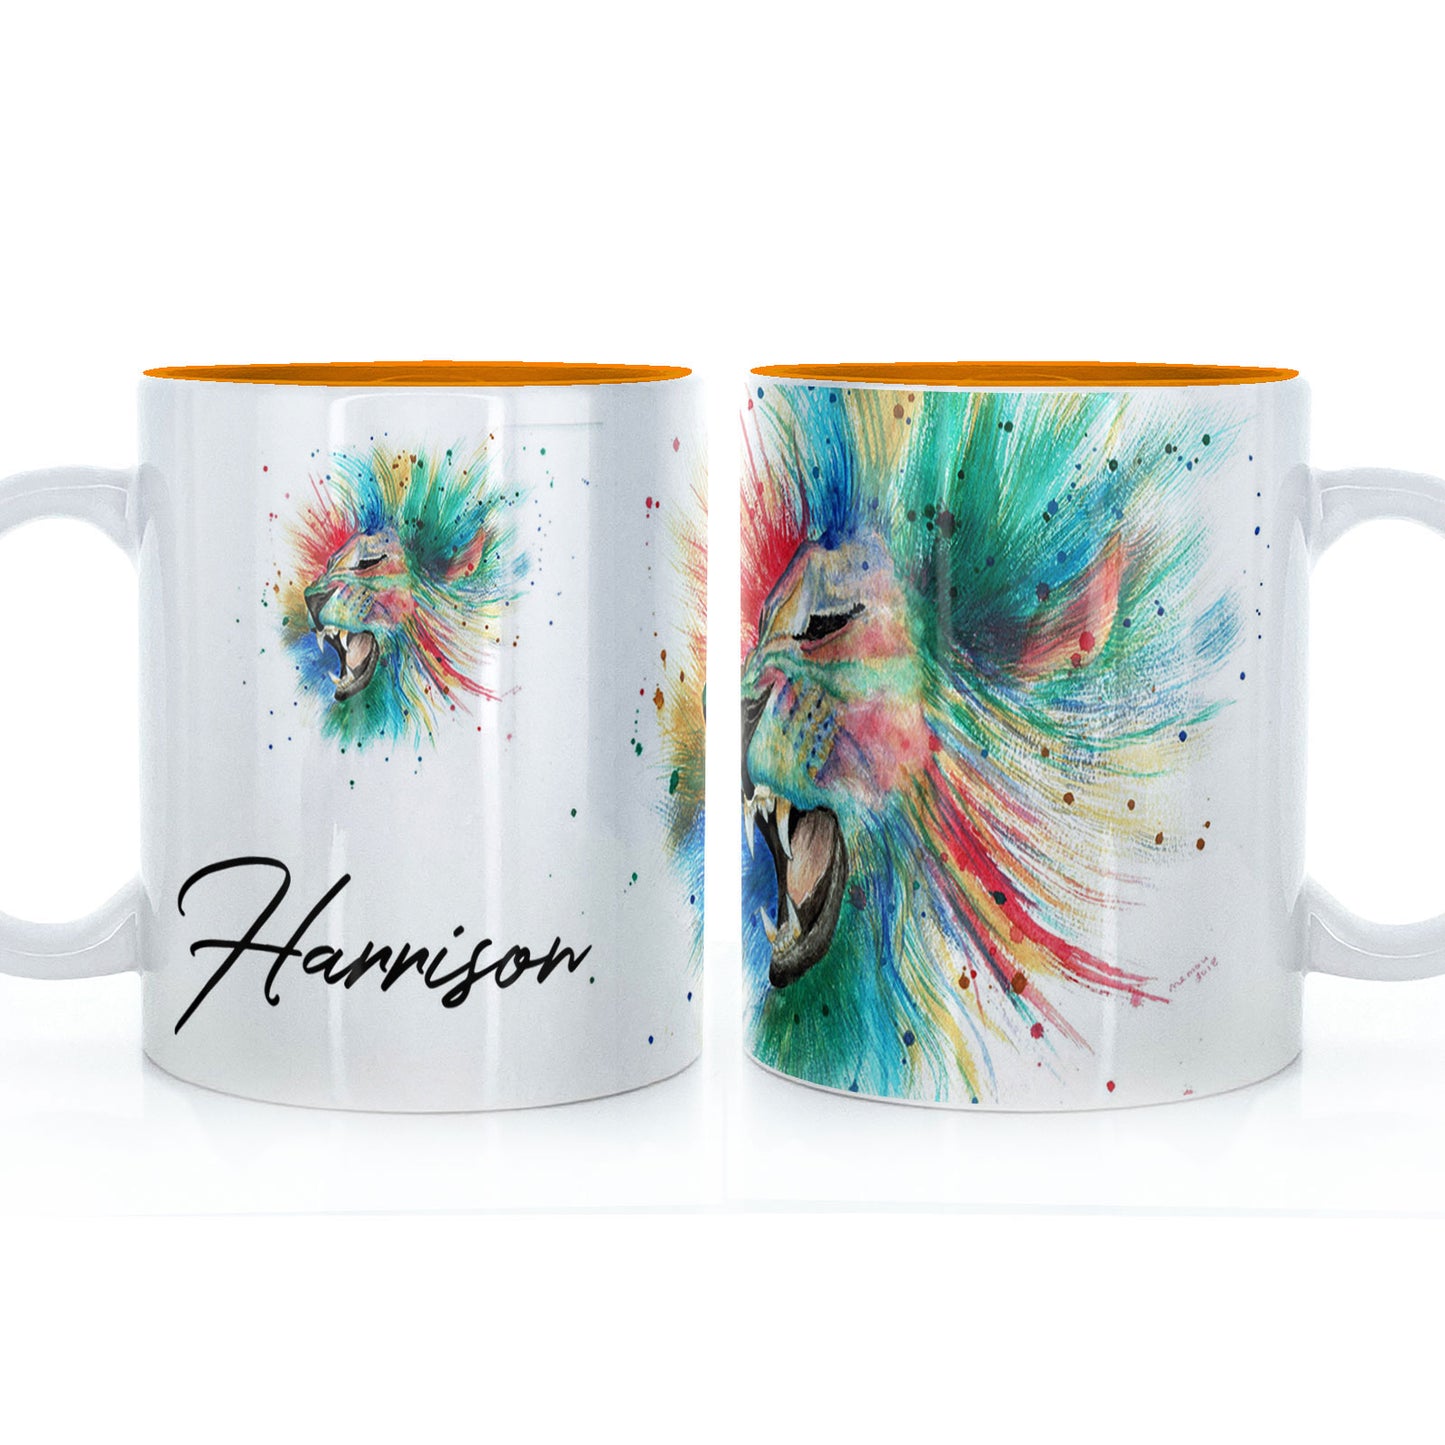 Personalised Mug with Stylish Text and Rainbow Lion